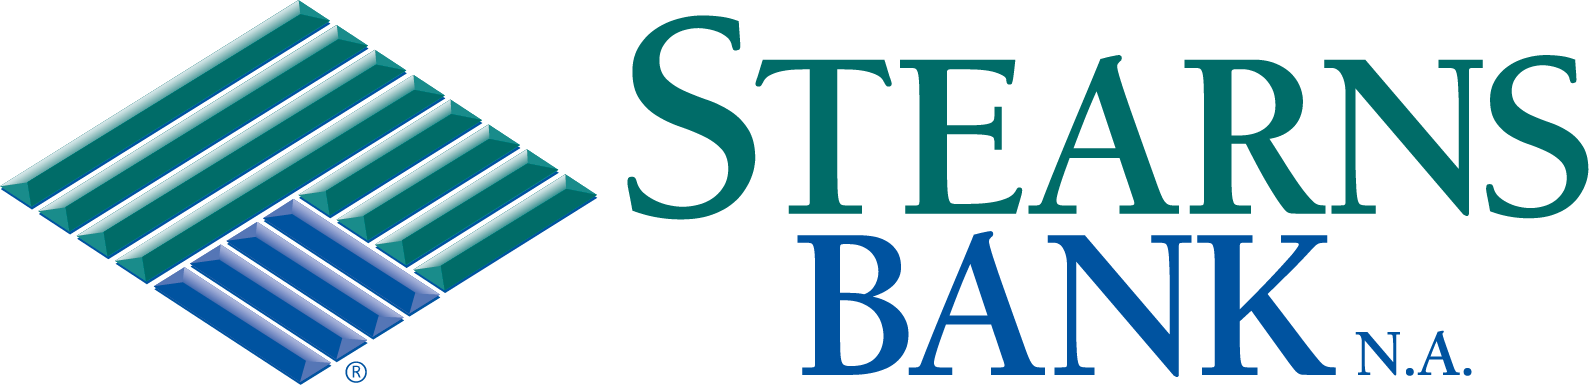 Stearns Bank N.A. logo